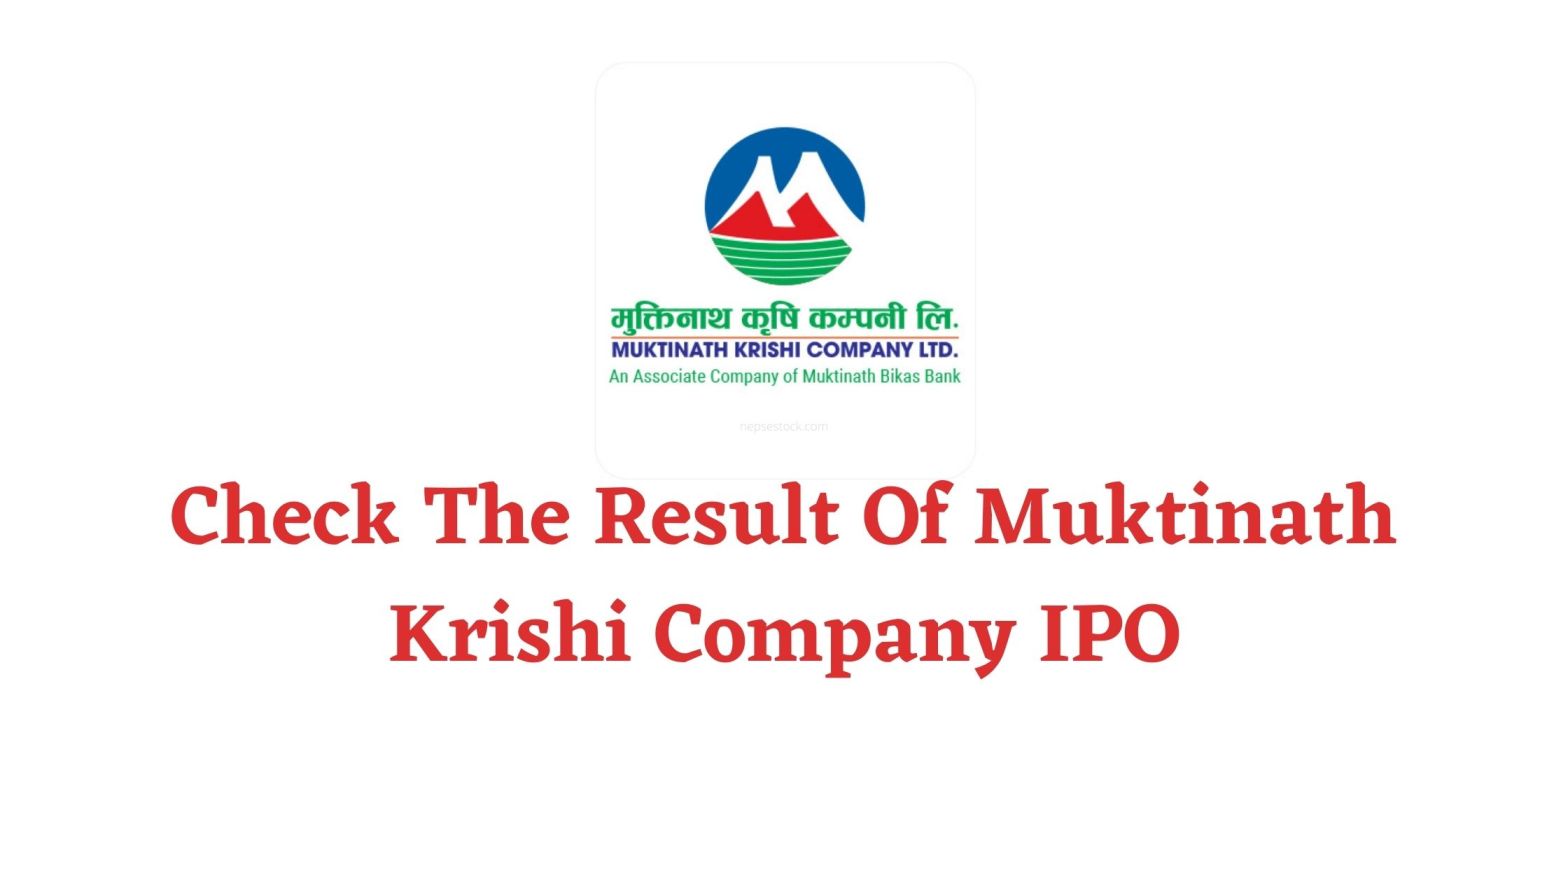 Check The Result Of Muktinath Krishi Company IPO